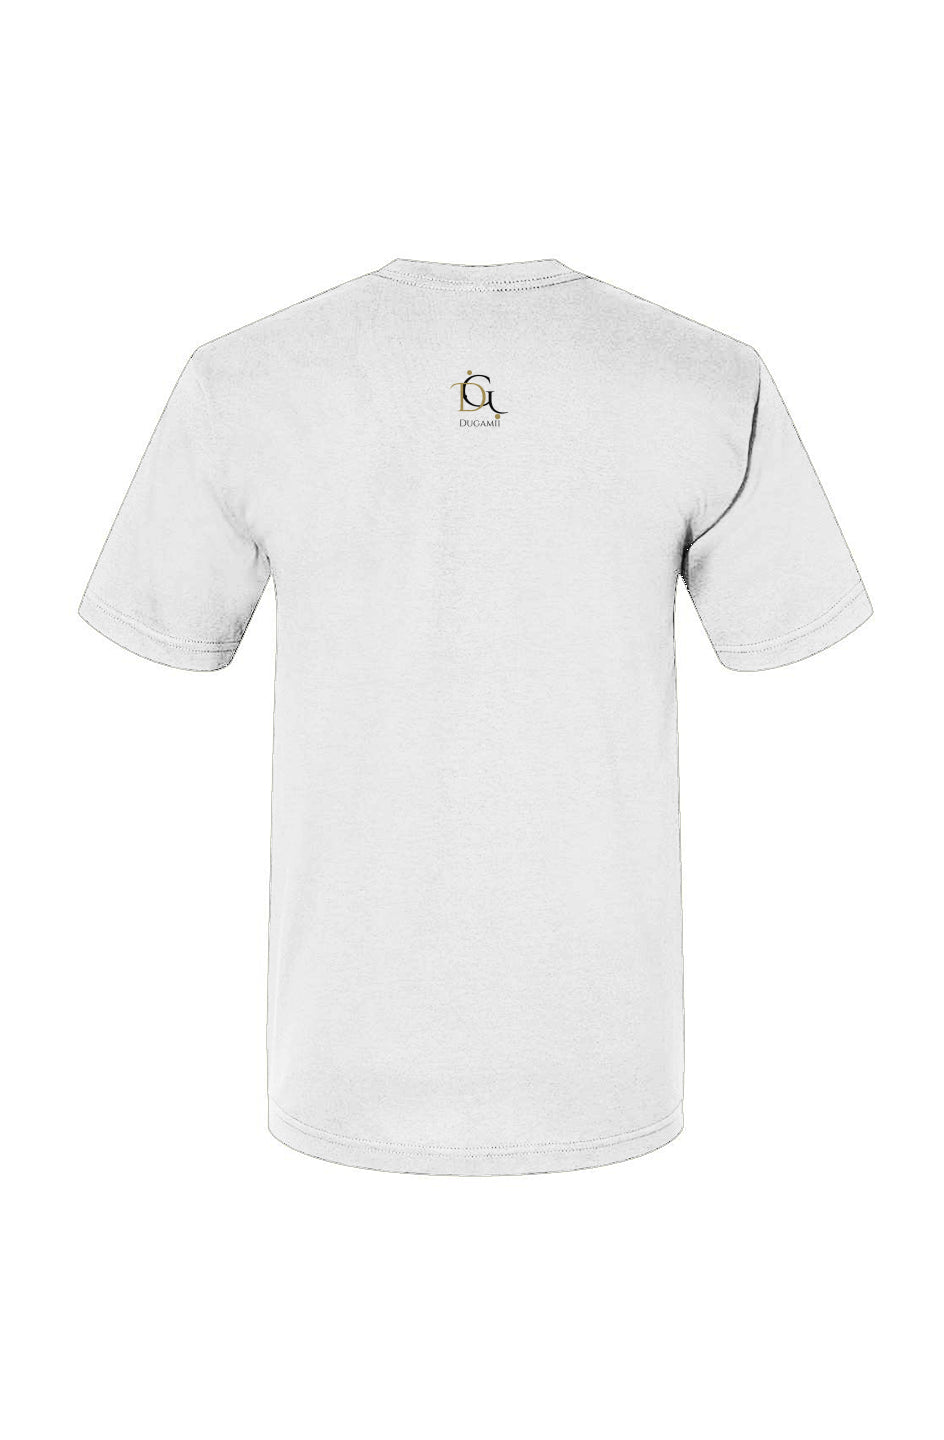 DuGamii "Basquait Inspired Word Art" 100% Cotton T-Shirt